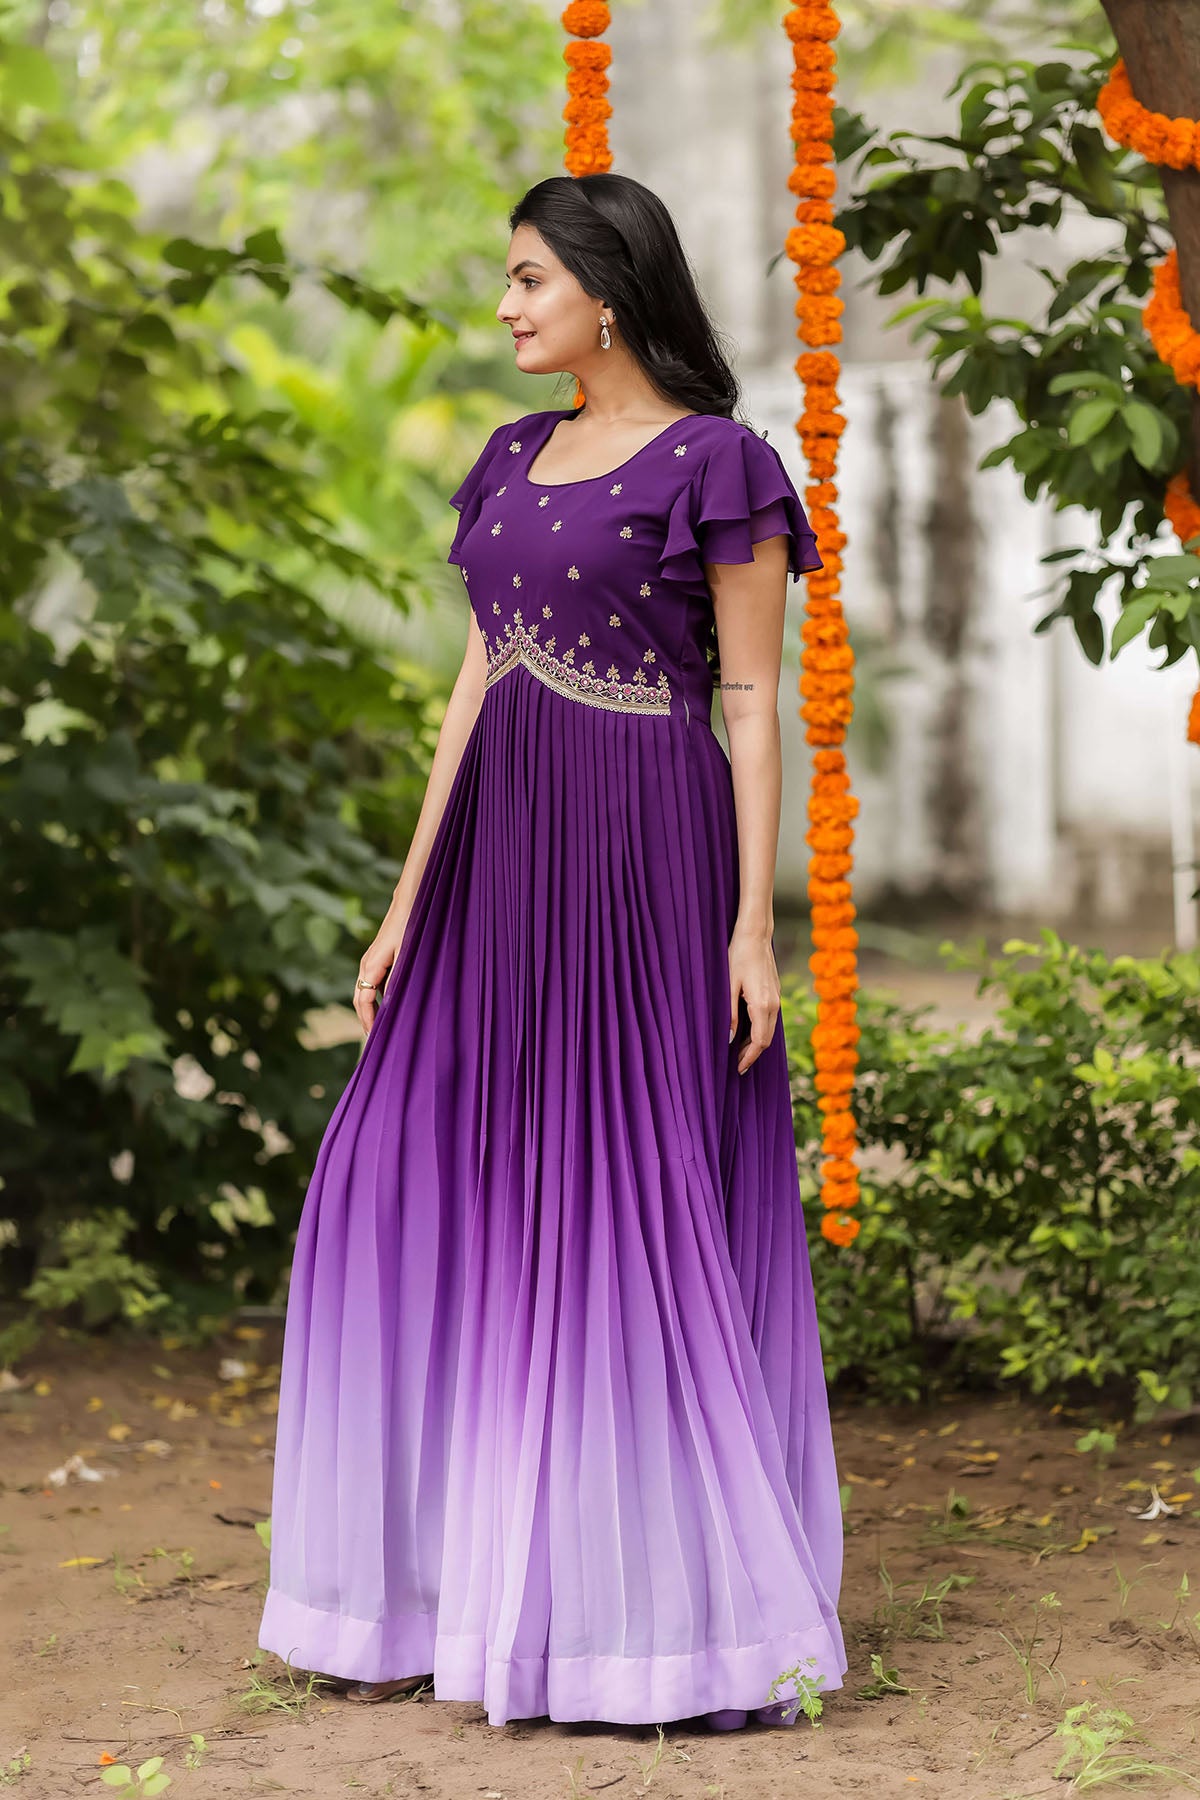 Beautiful Fashion Woman in Purple Long Dress Stock Image - Image of gray,  female: 29693275